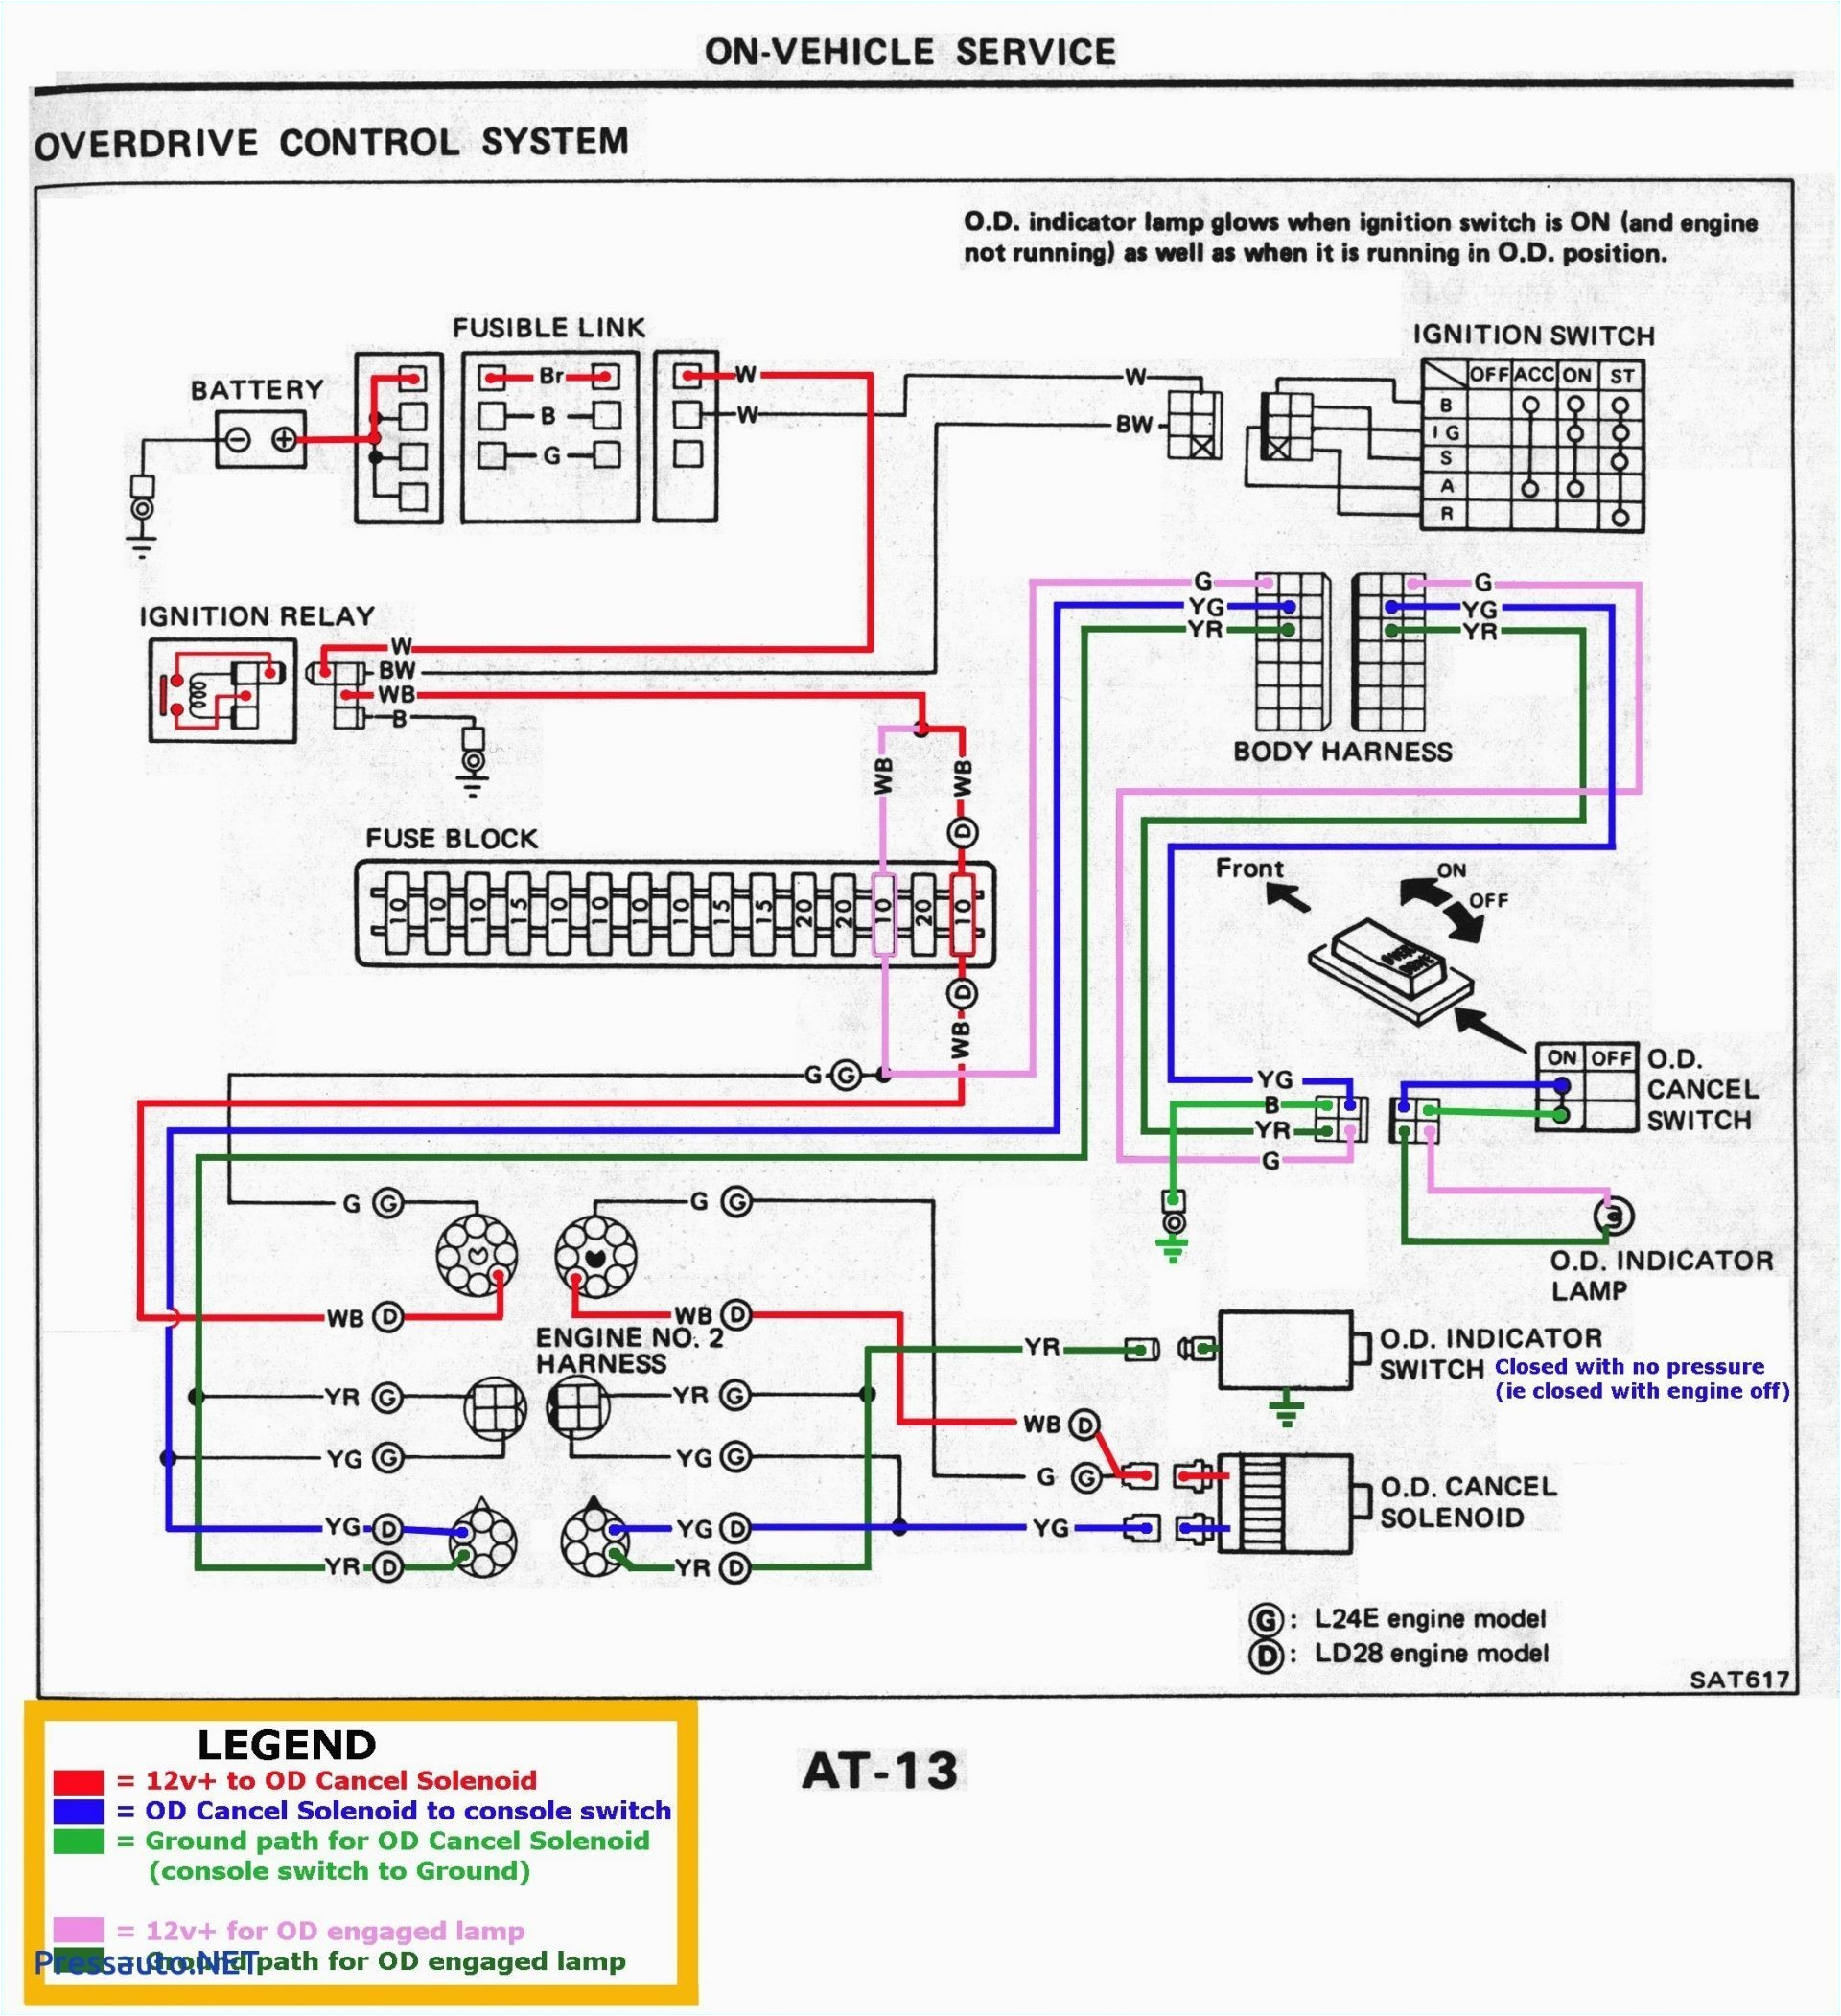 Mach 460 Wiring Diagram Wiring Diagram for 1981 Honda Civic Get Free Image About Wiring